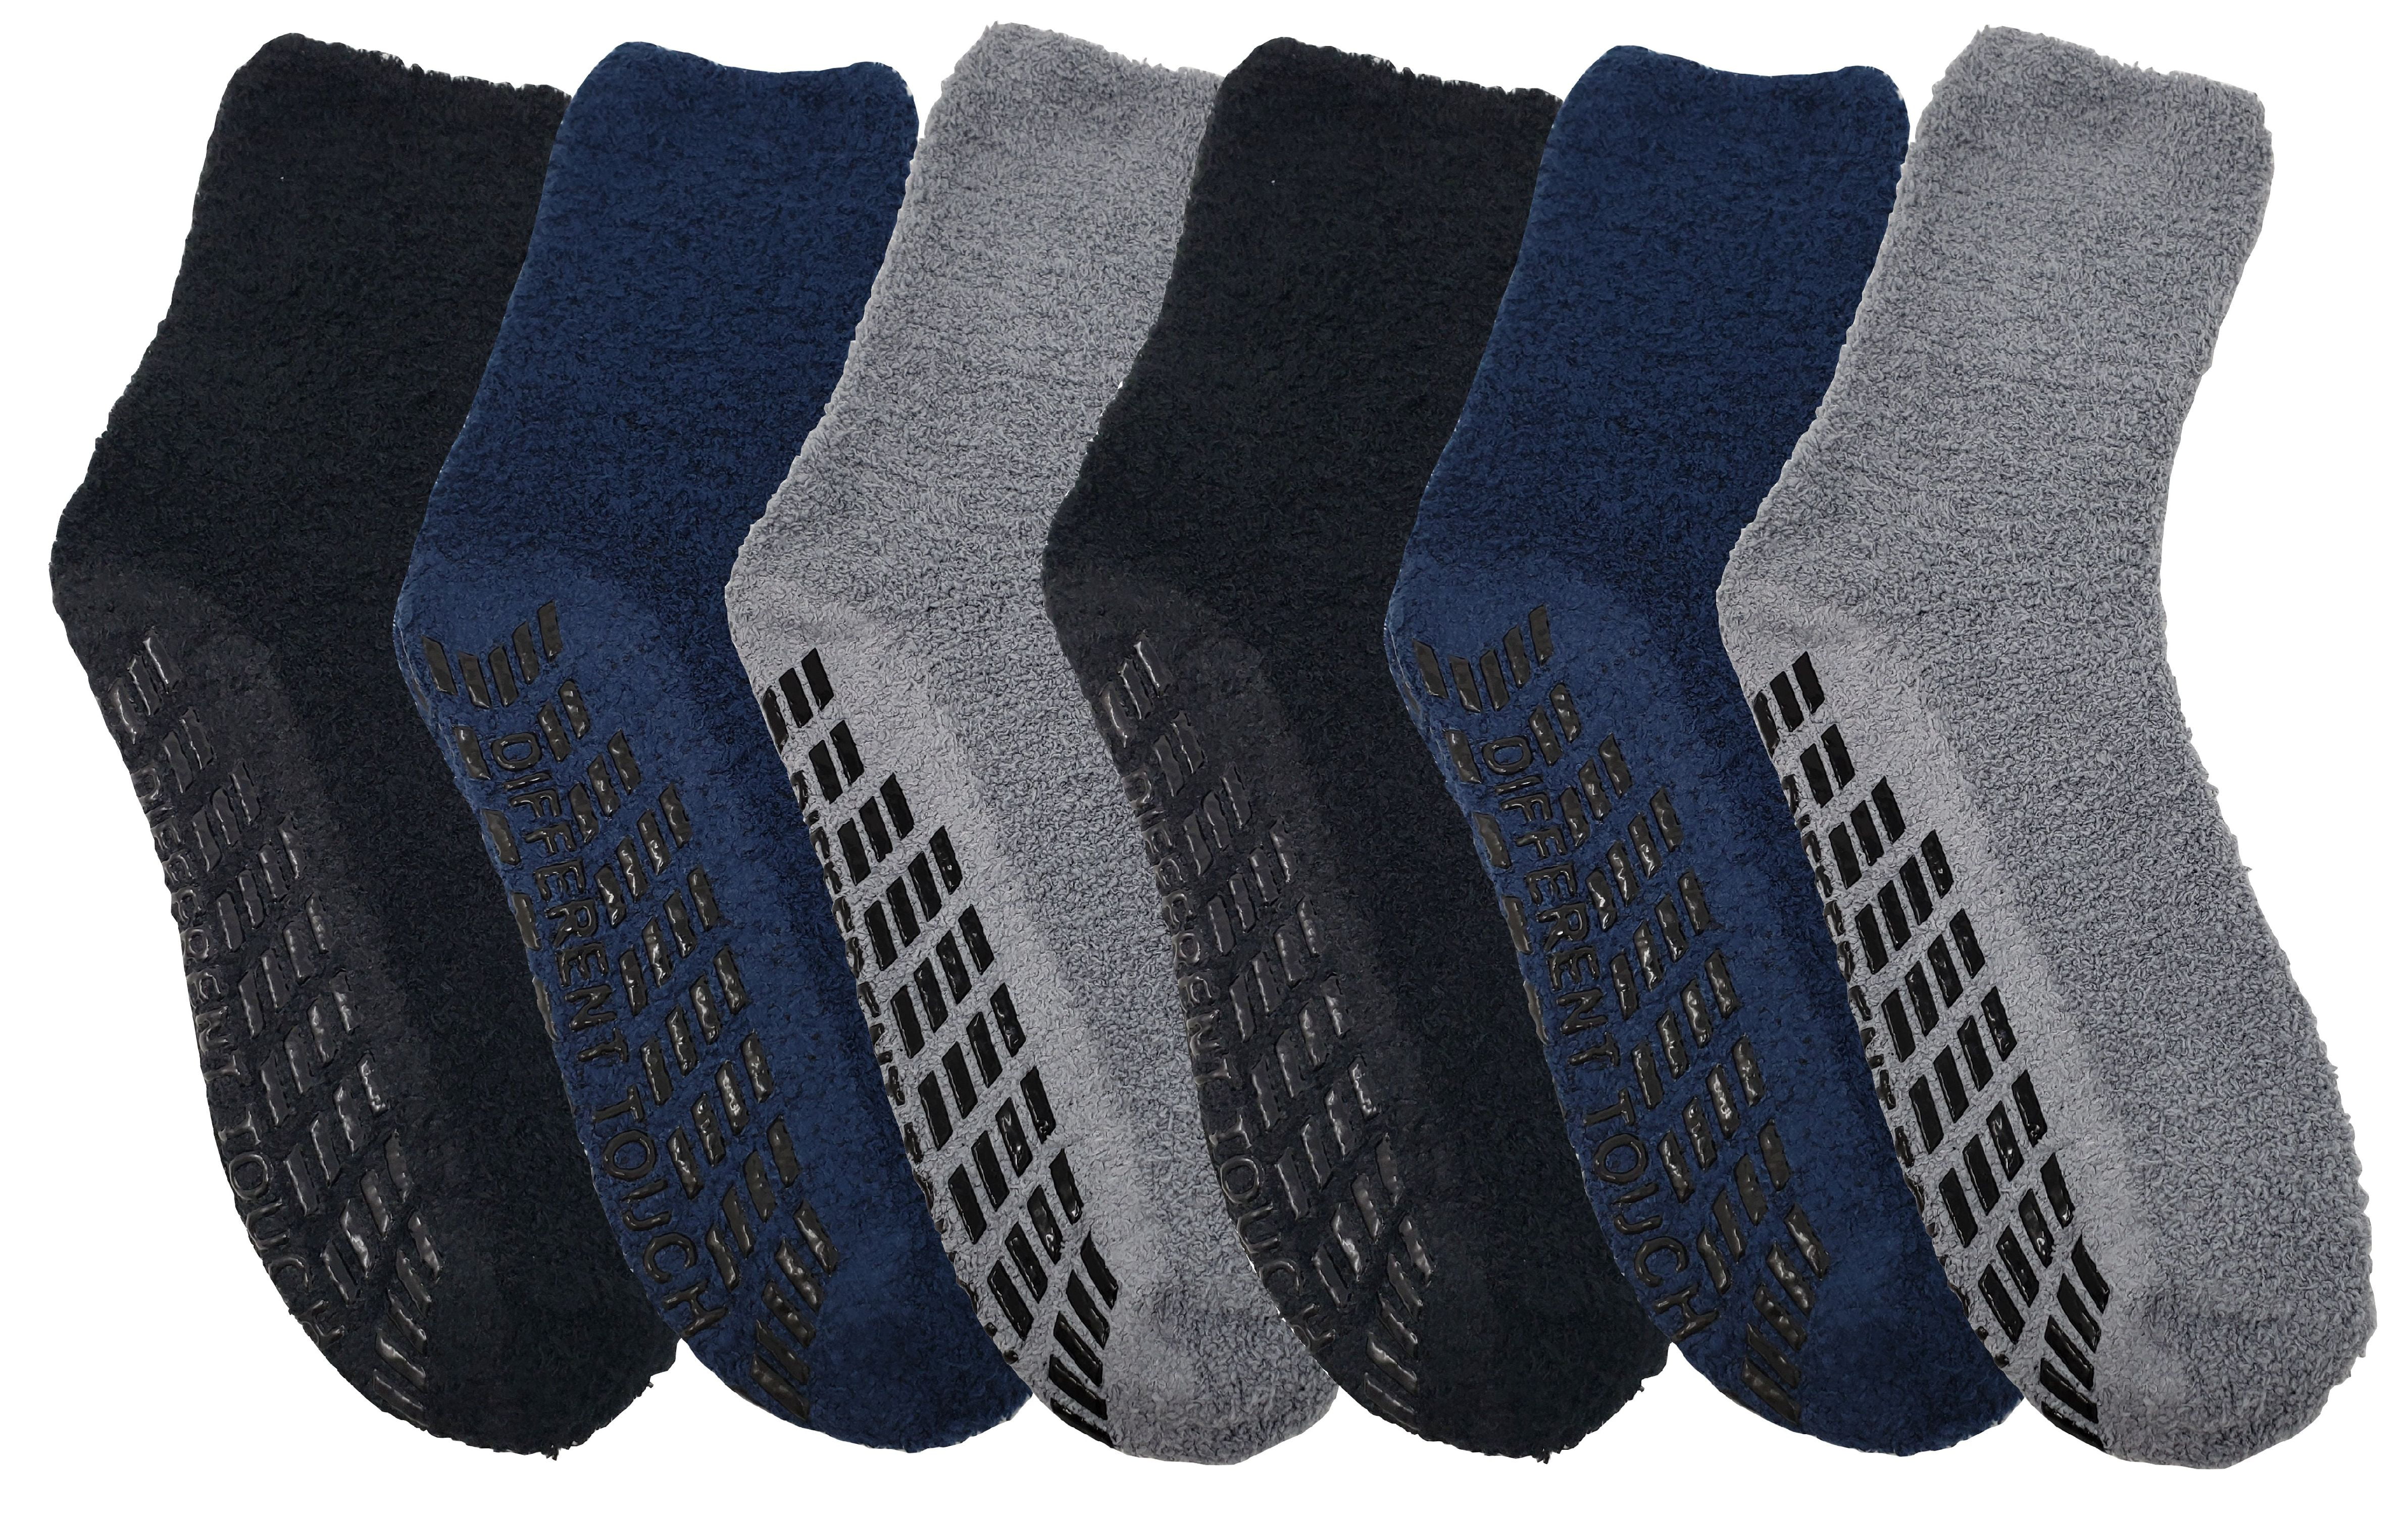 Different Touch - Non Slip Hospital Socks for Men Women Cozy Fuzzy Home ...